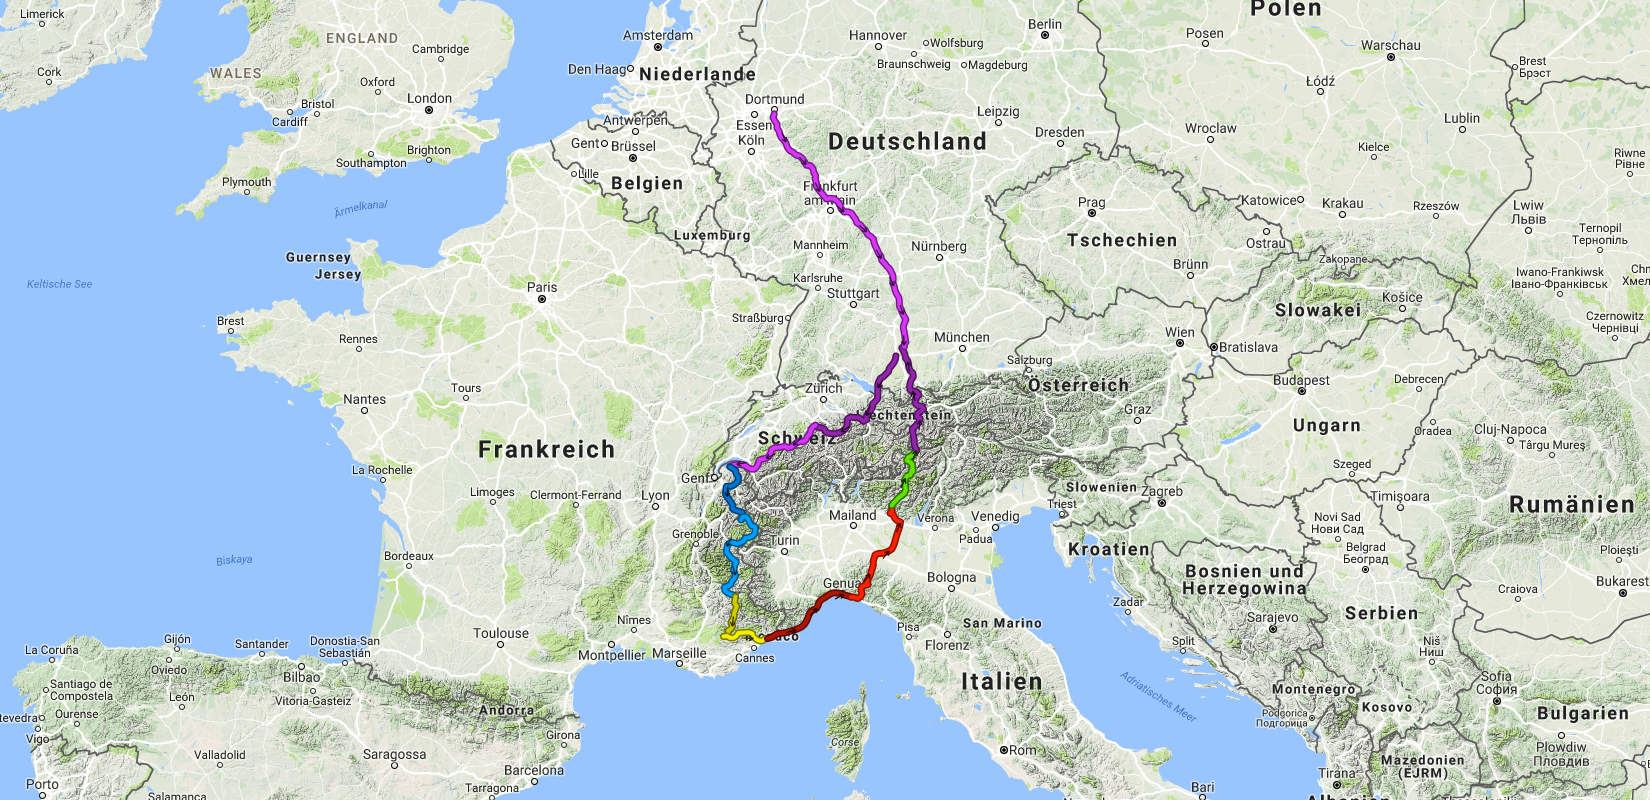 Unsere geplante Alpen Tour